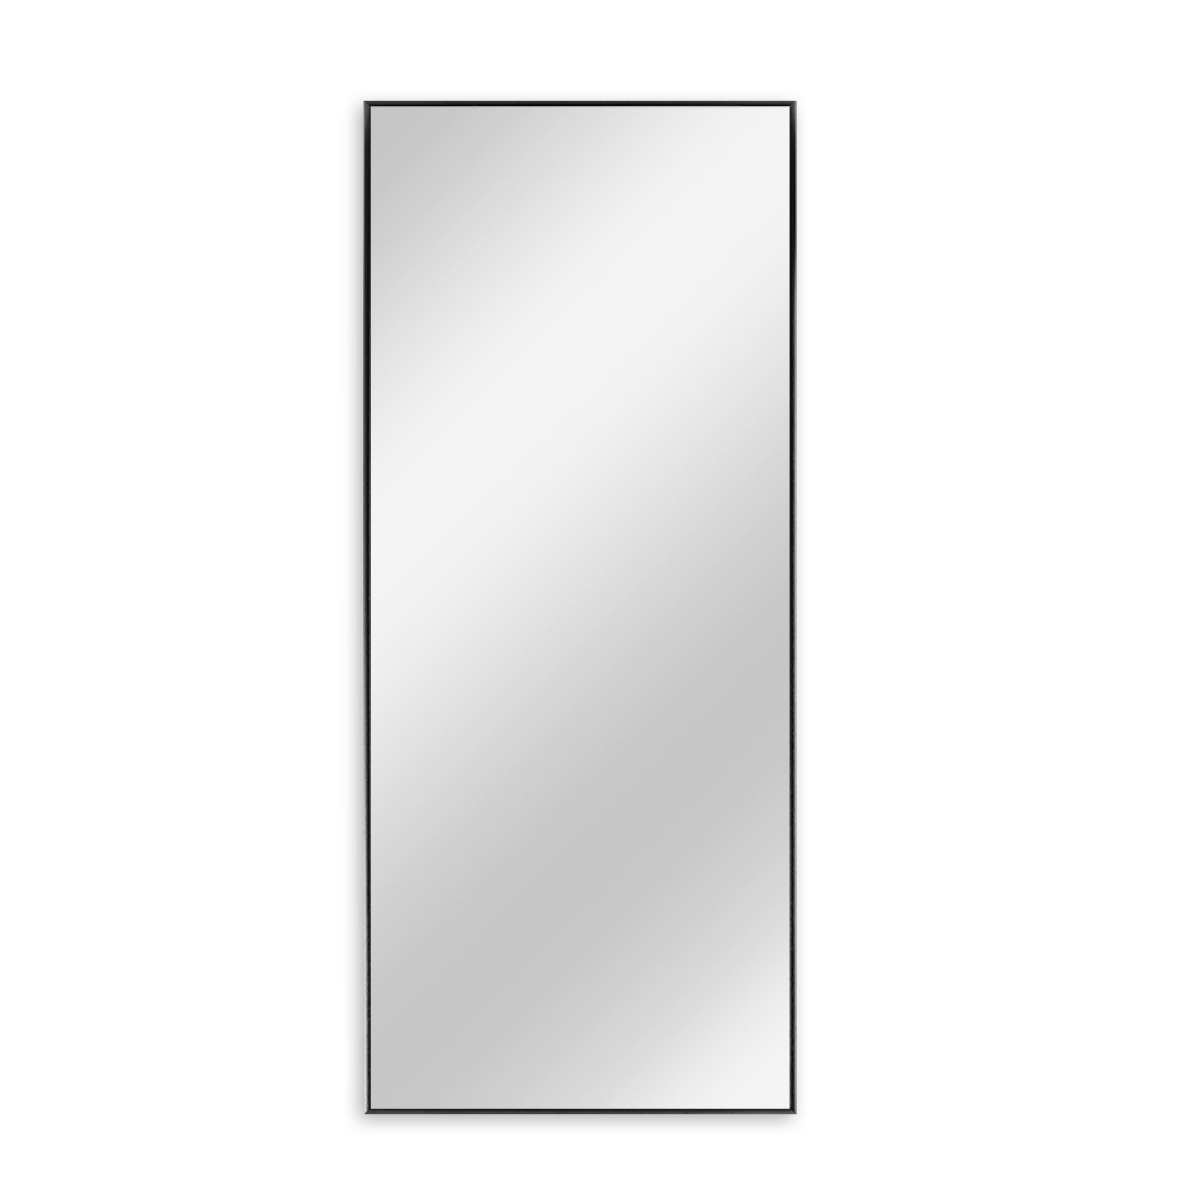 UPC 808230000063 product image for 397385 70.9 x 23.6 x 0.9 in. Minimal Black & Clear Rectangular Wall Mirror | upcitemdb.com